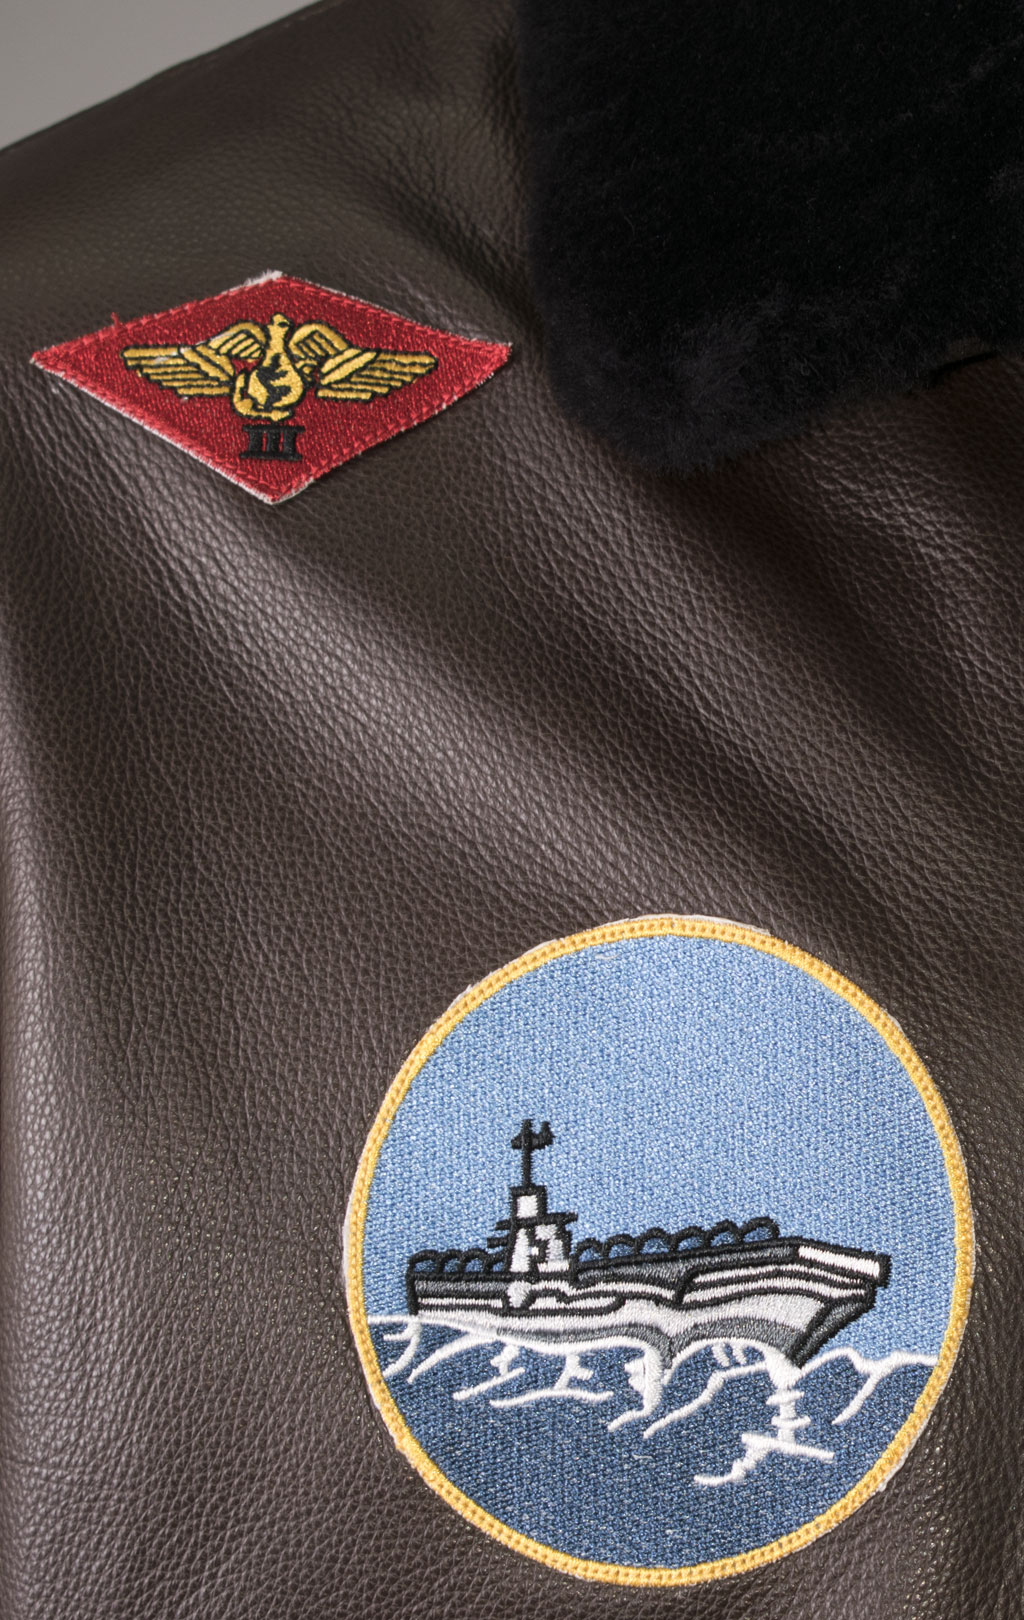 Куртка-пилот KODZIC G-1 кожа с нашивками MH brown 